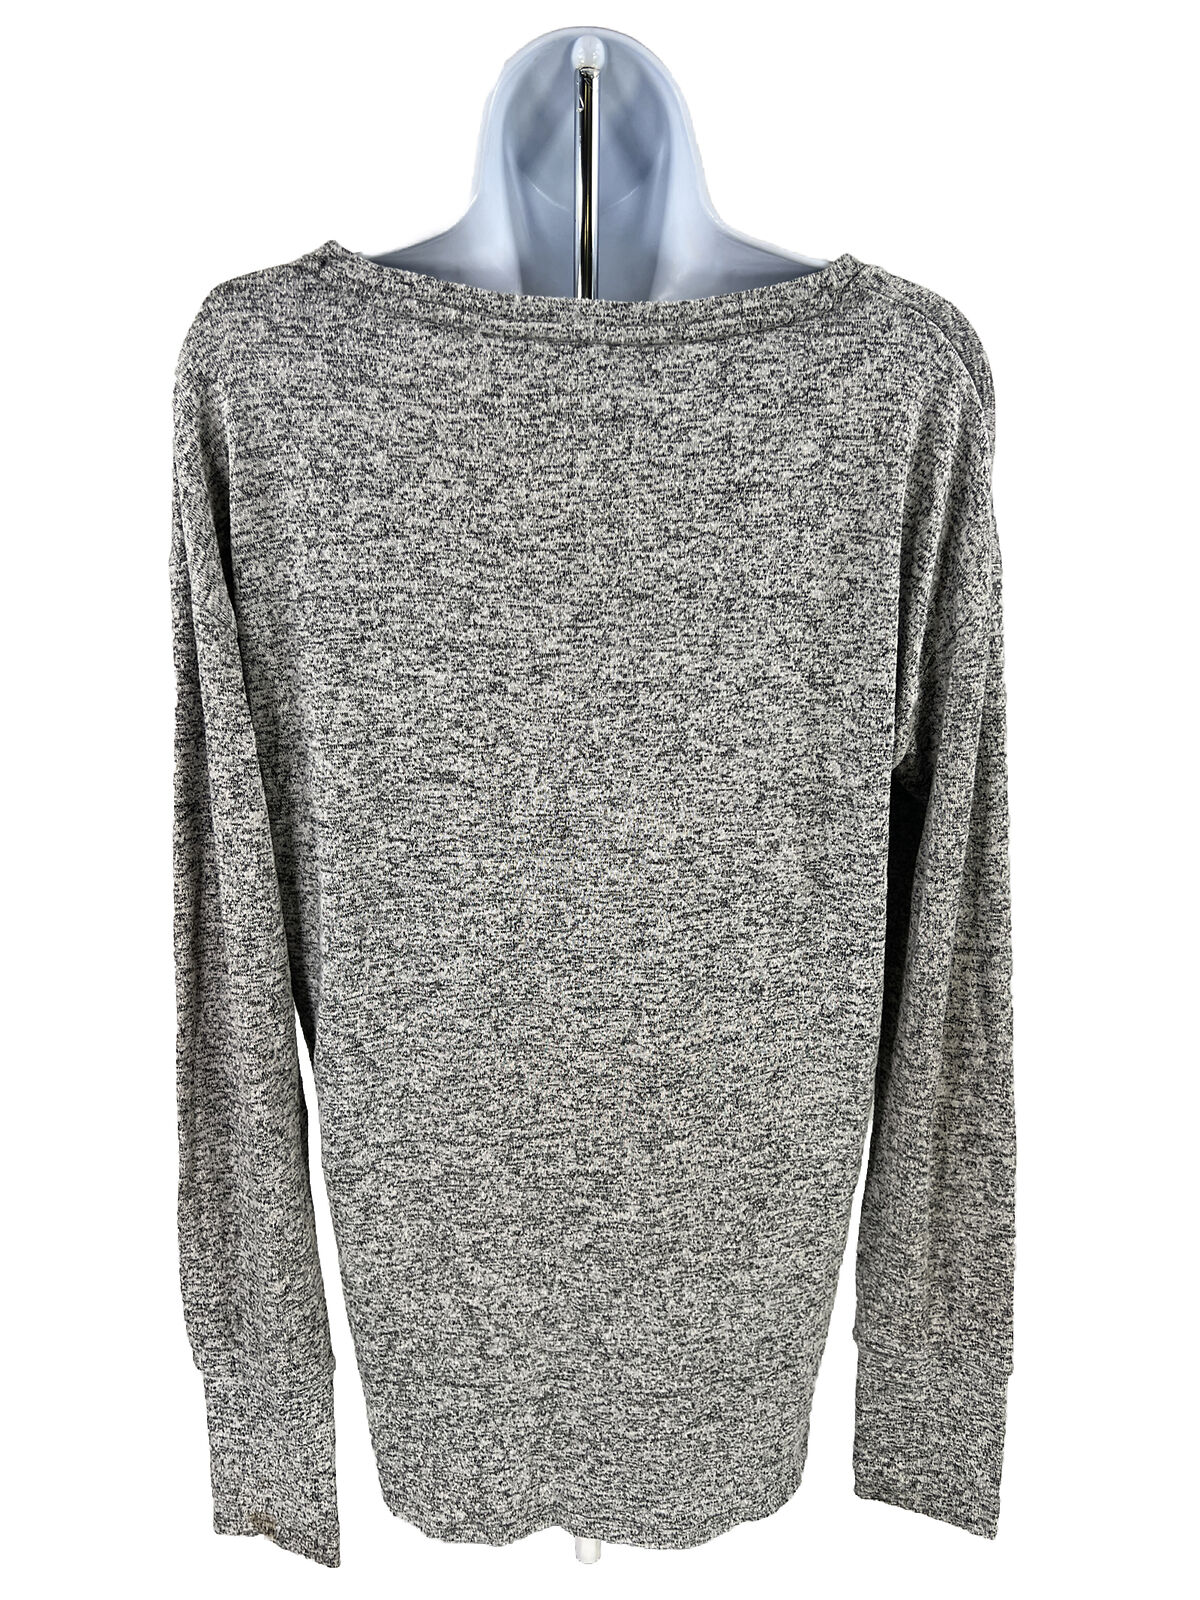 Athleta Women's Gray Luxe Pose Long Sleeve Sweater - S